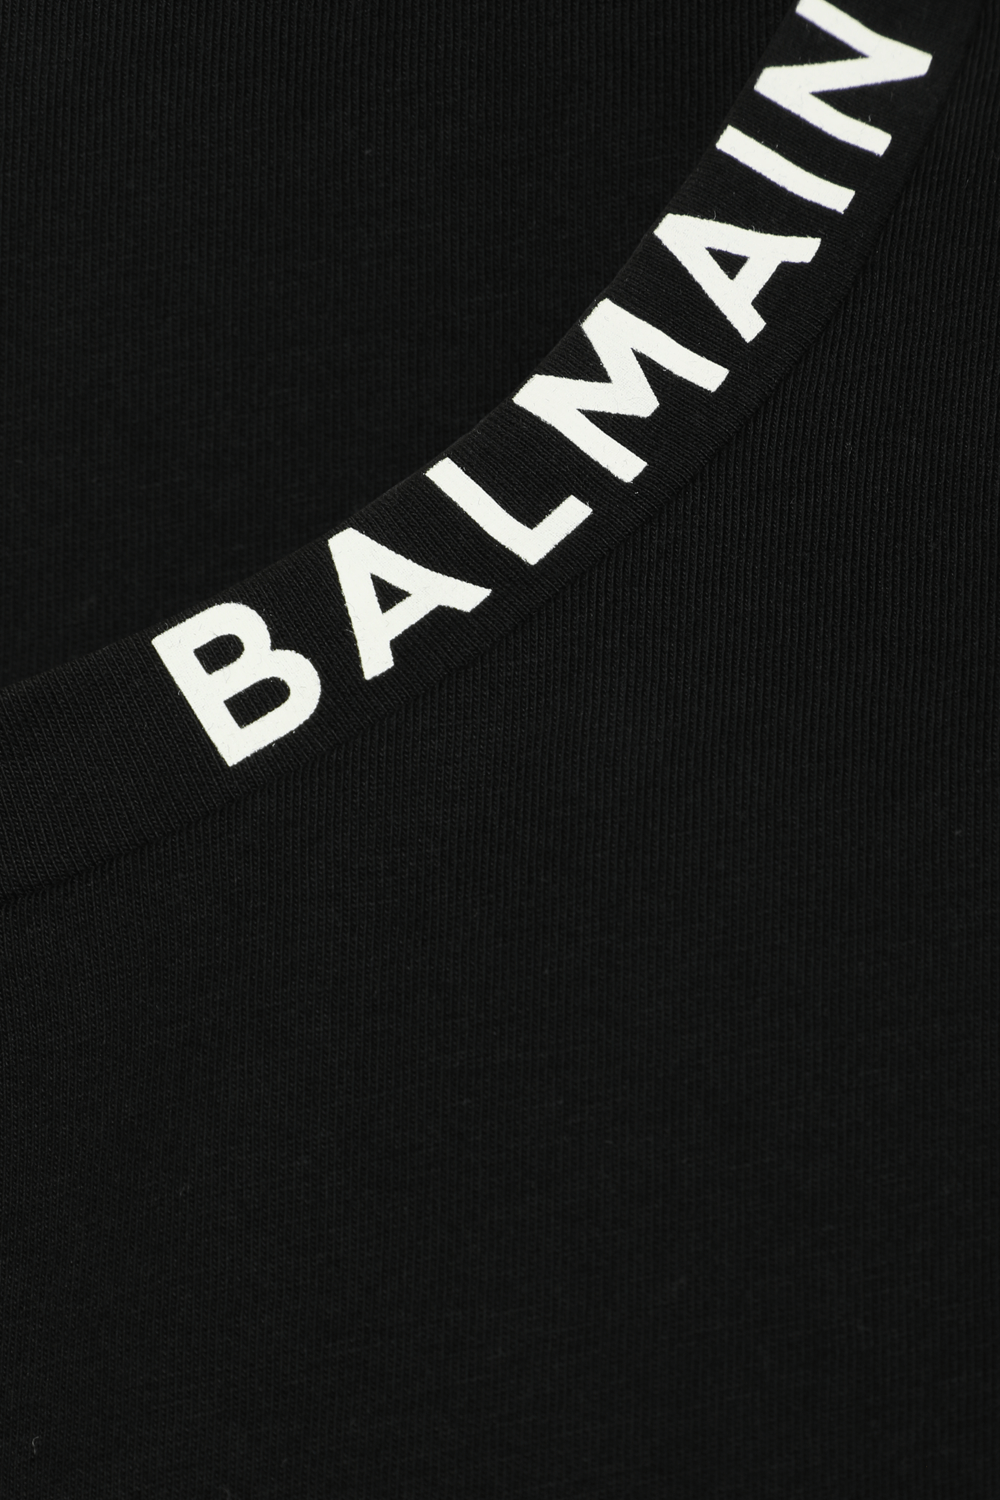 Balmain Print Collar Tshirt in Black BALMAIN